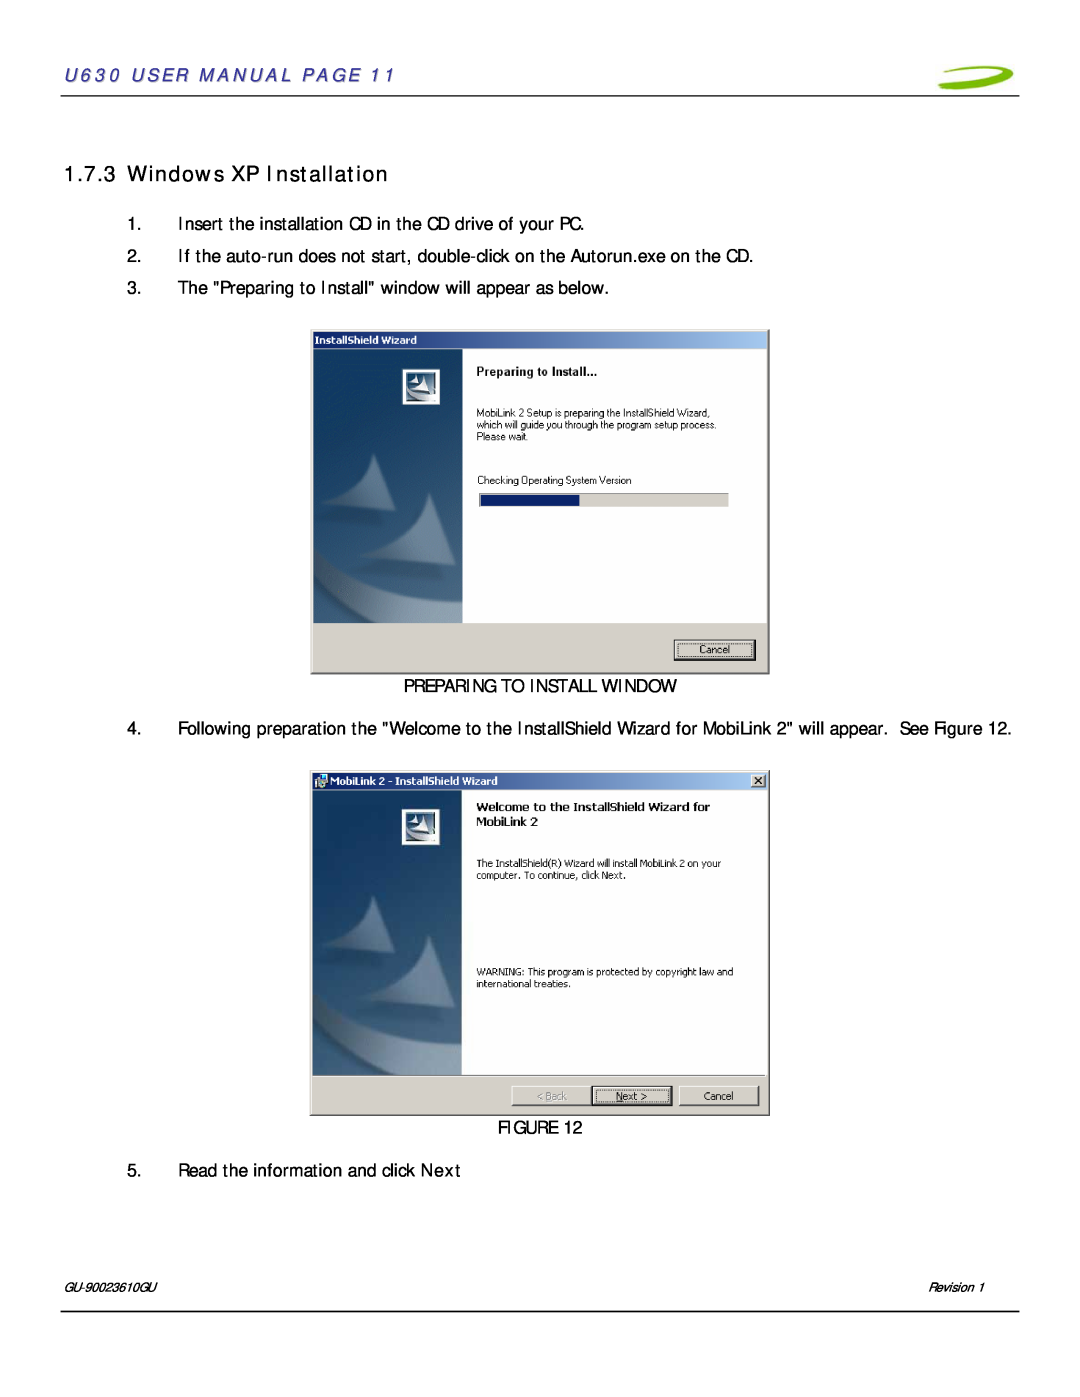 InFocus user manual Windows XP Installation, U630 USER MANUAL PAGE 